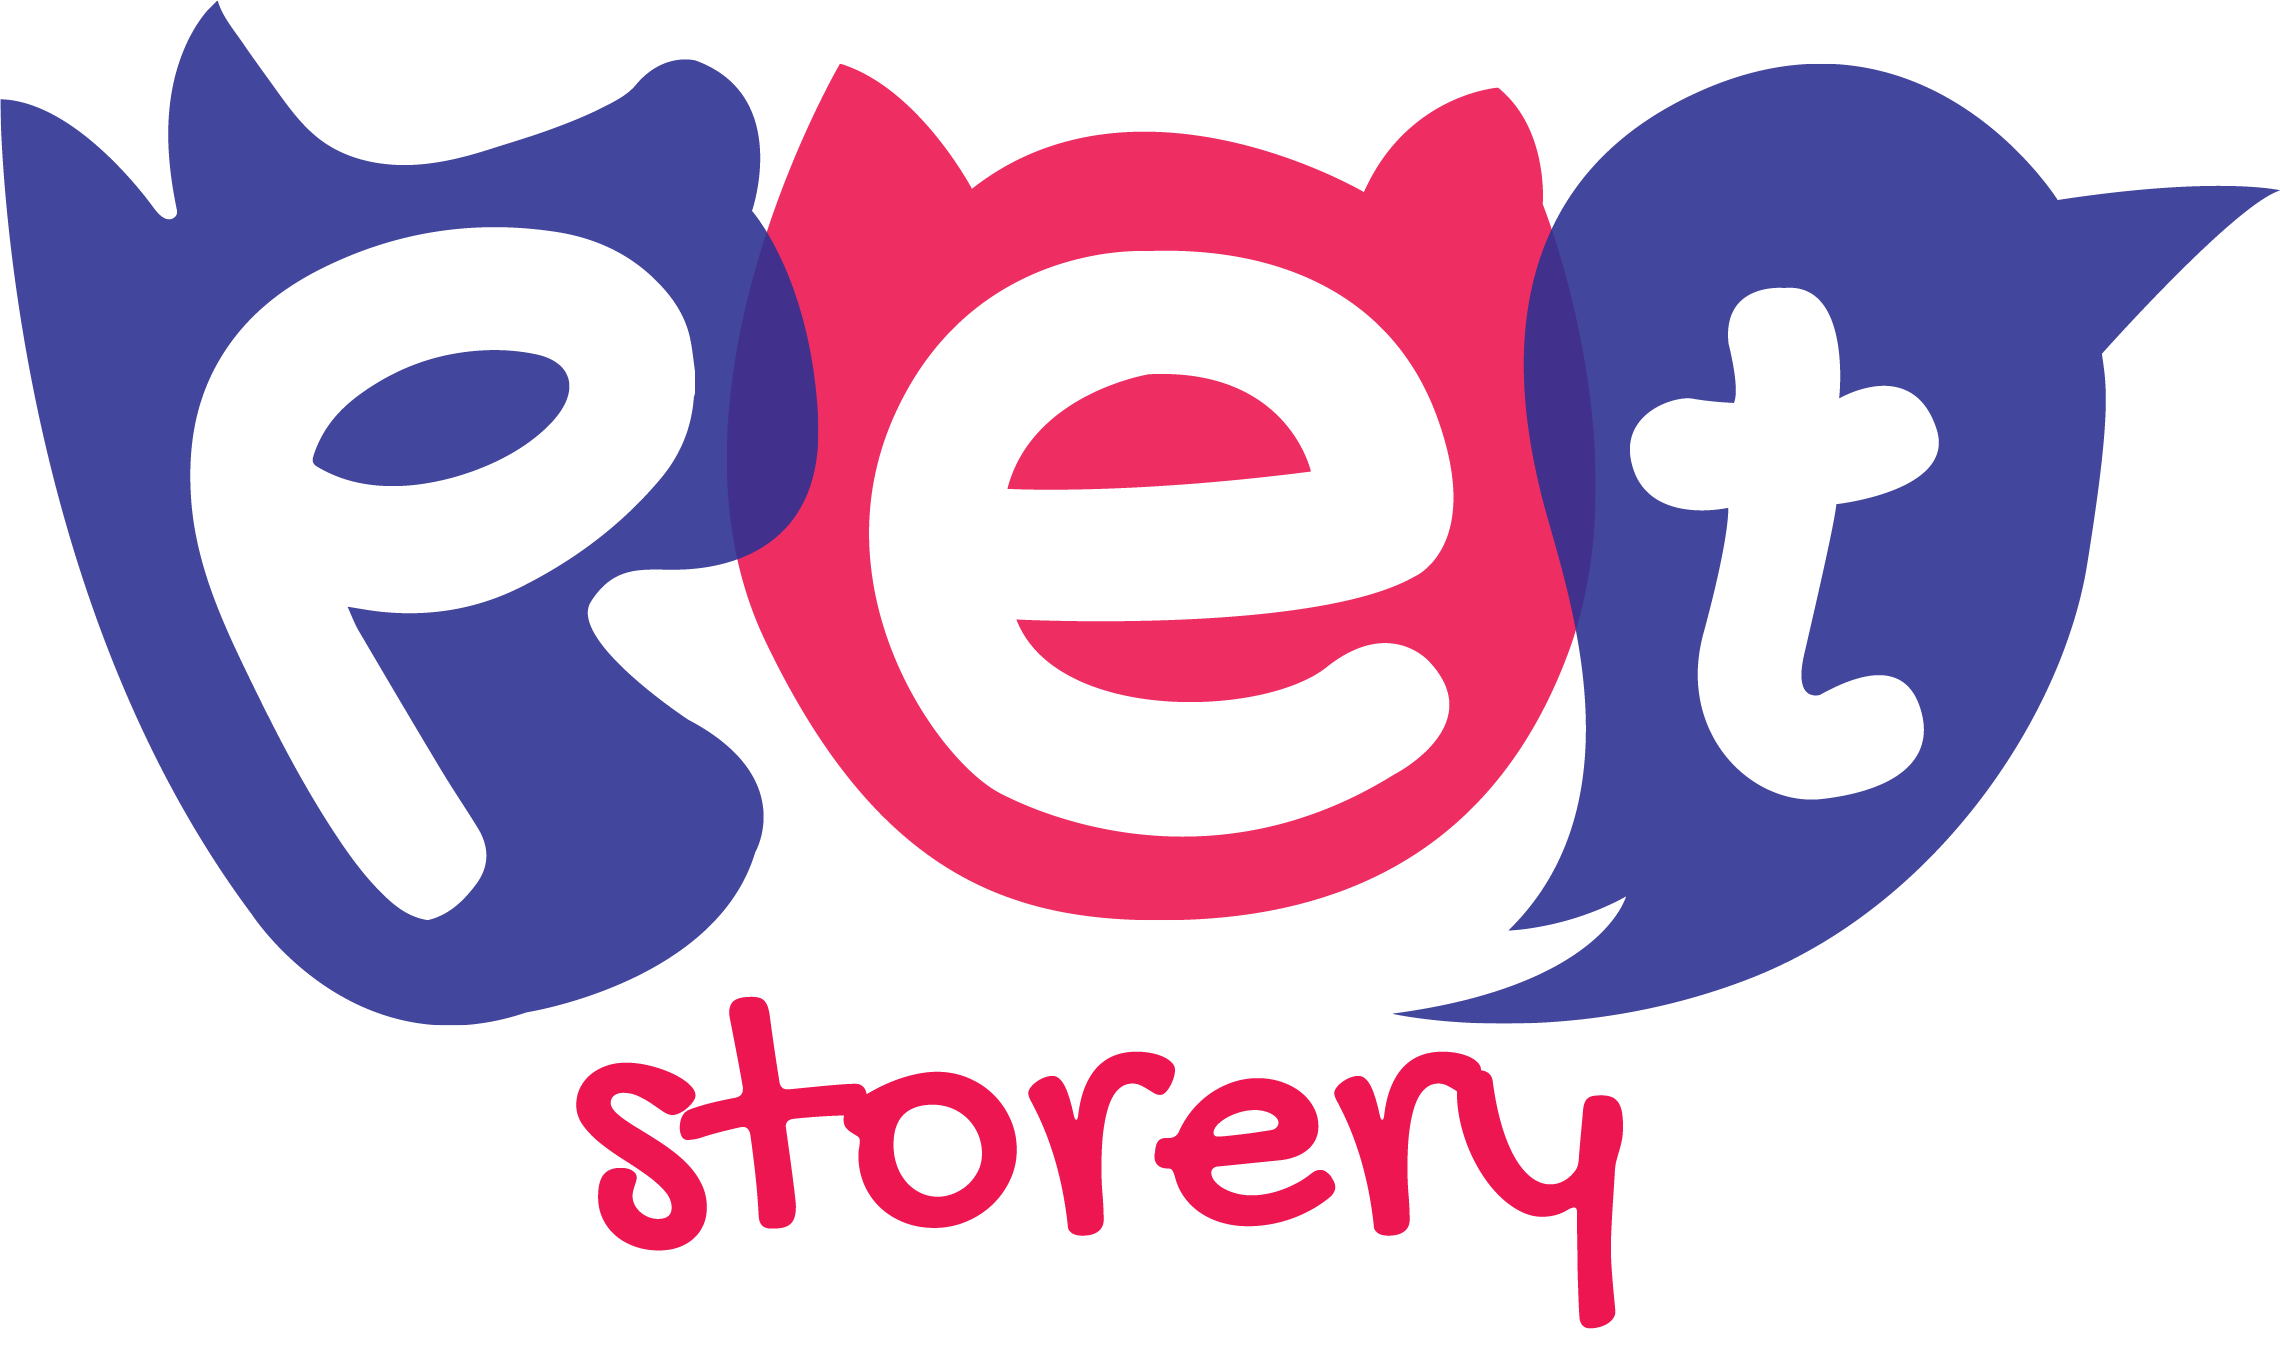 Pet Storery